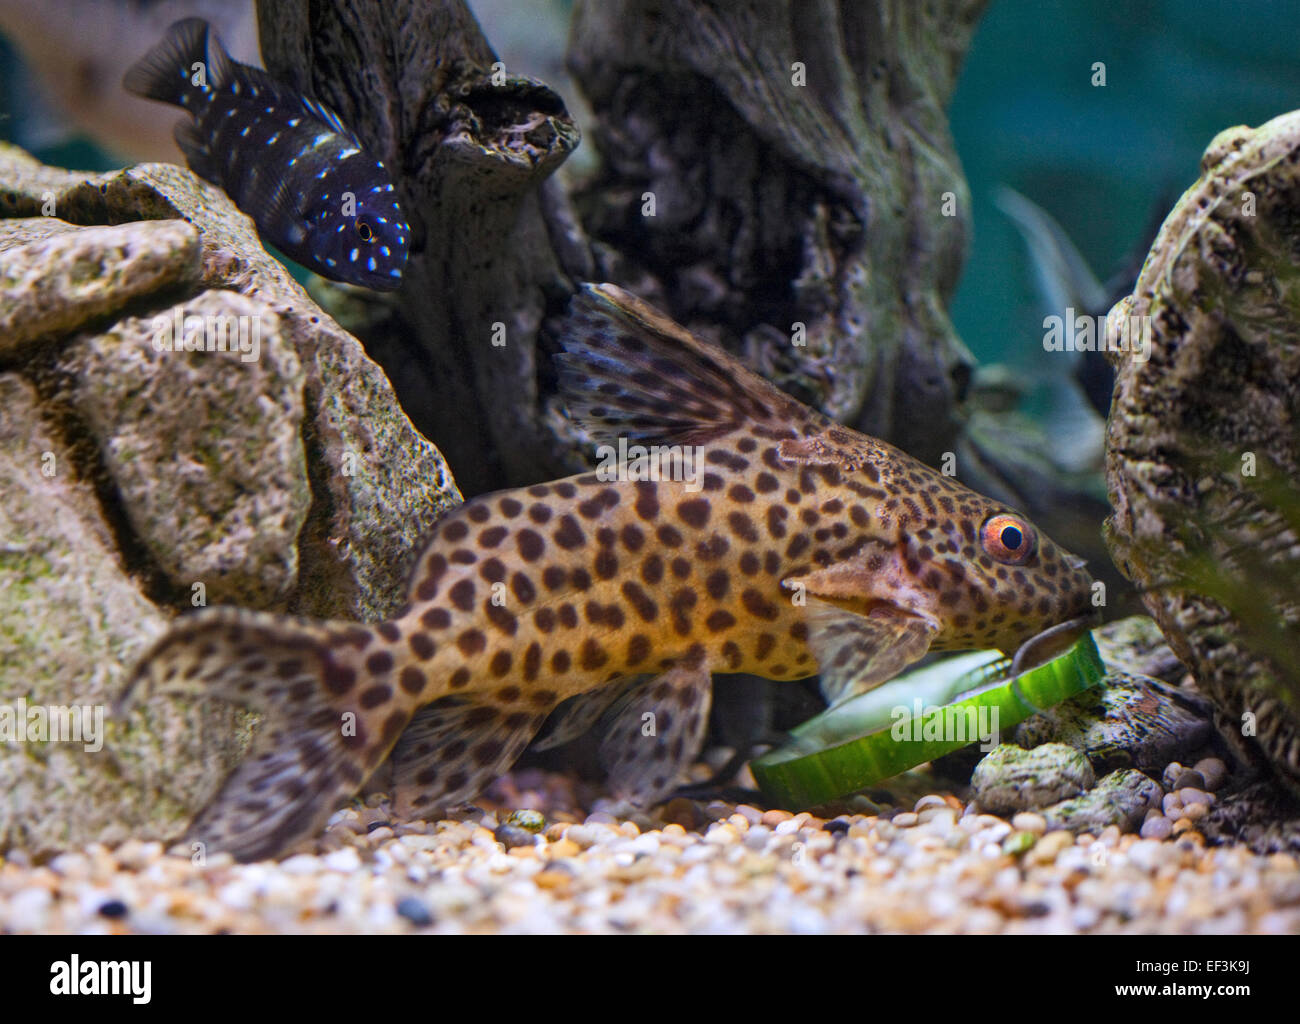 Cuckoo Catfish (synodontis multipunctatus) eating cucumber with Tropheus Duboisi Cichlid in background Stock Photo